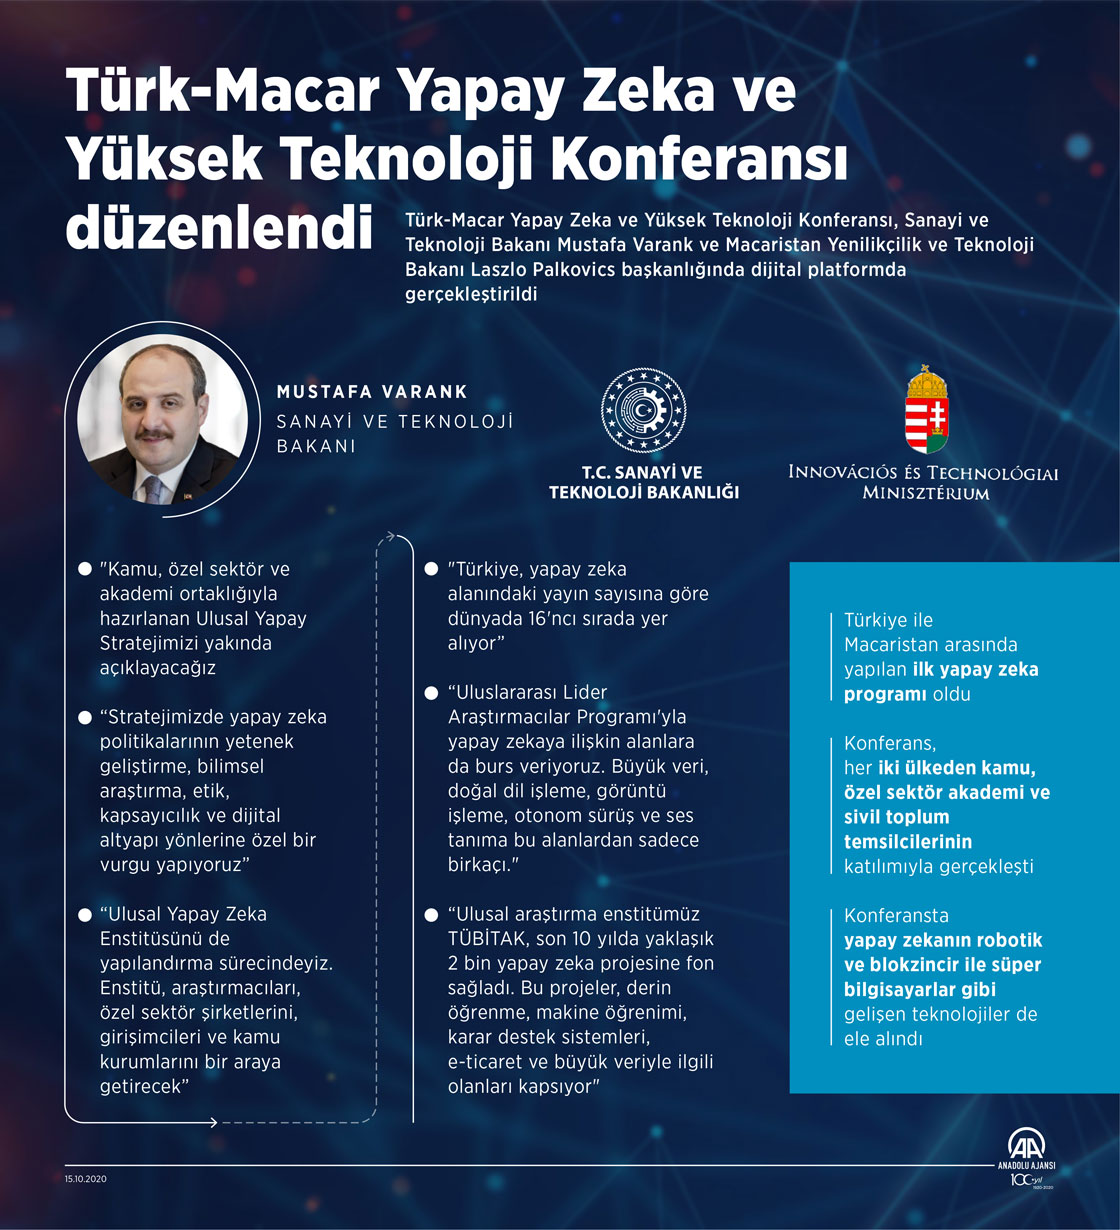 Türk-Macar Yapay Zeka ve Yüksek Teknoloji Konferansı düzenlendi